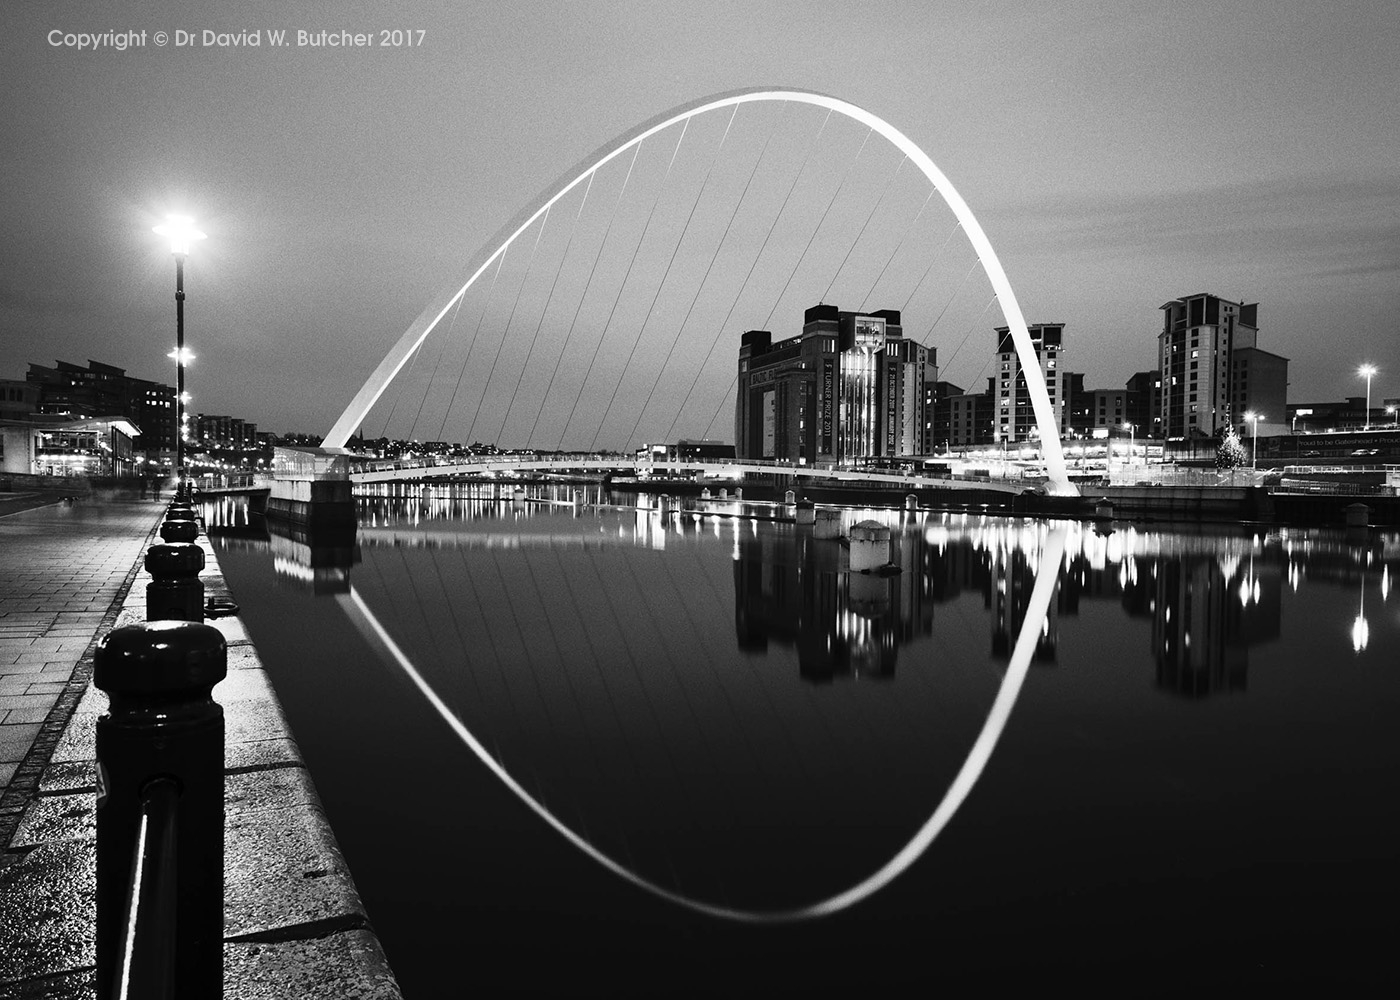 Gateshead Millennium Bridge Reflections at Night from Newcastle